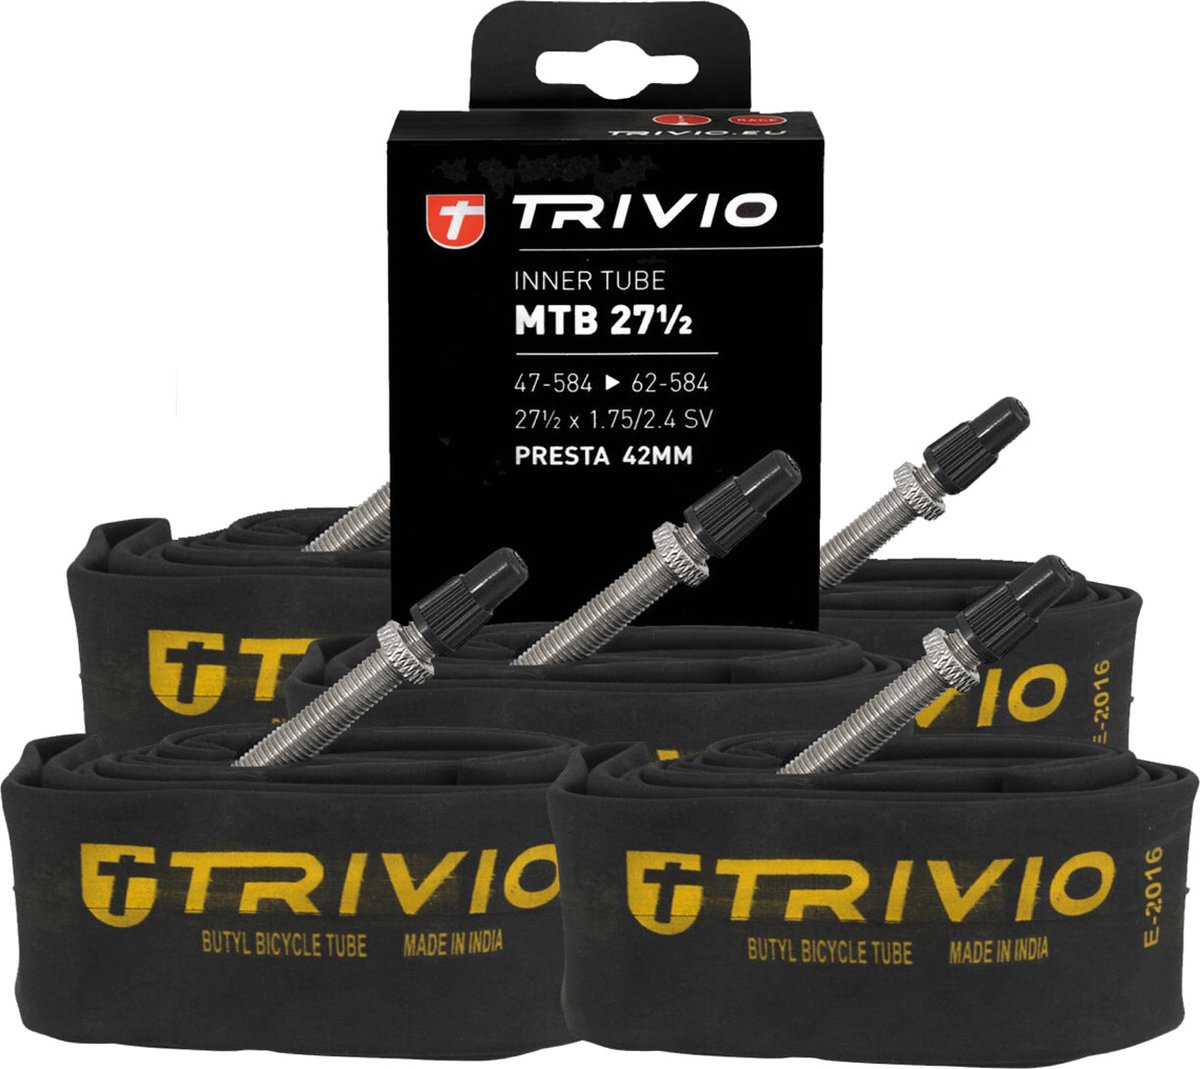 Trivio - MTB Binnenband 27½X1.75/2.4 SV 42MM Presta 5 stuks voordeelpakket